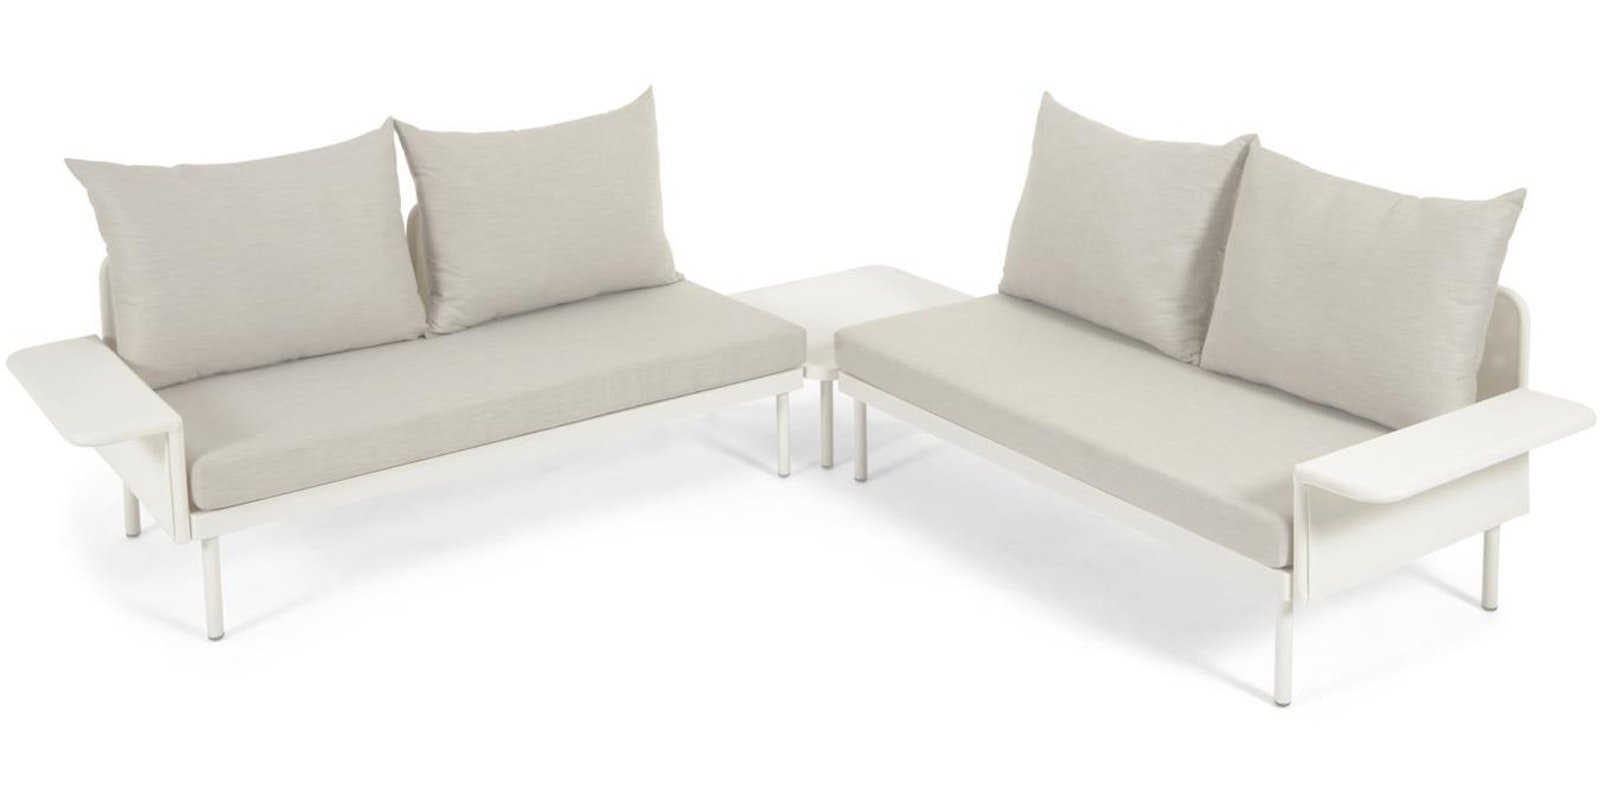 Zaltana, Udendørs sofasæt, Metal, sæt á 2 stk. by LaForma (H: 82 cm. x B: 230 cm. x L: 230 cm., Hvid)